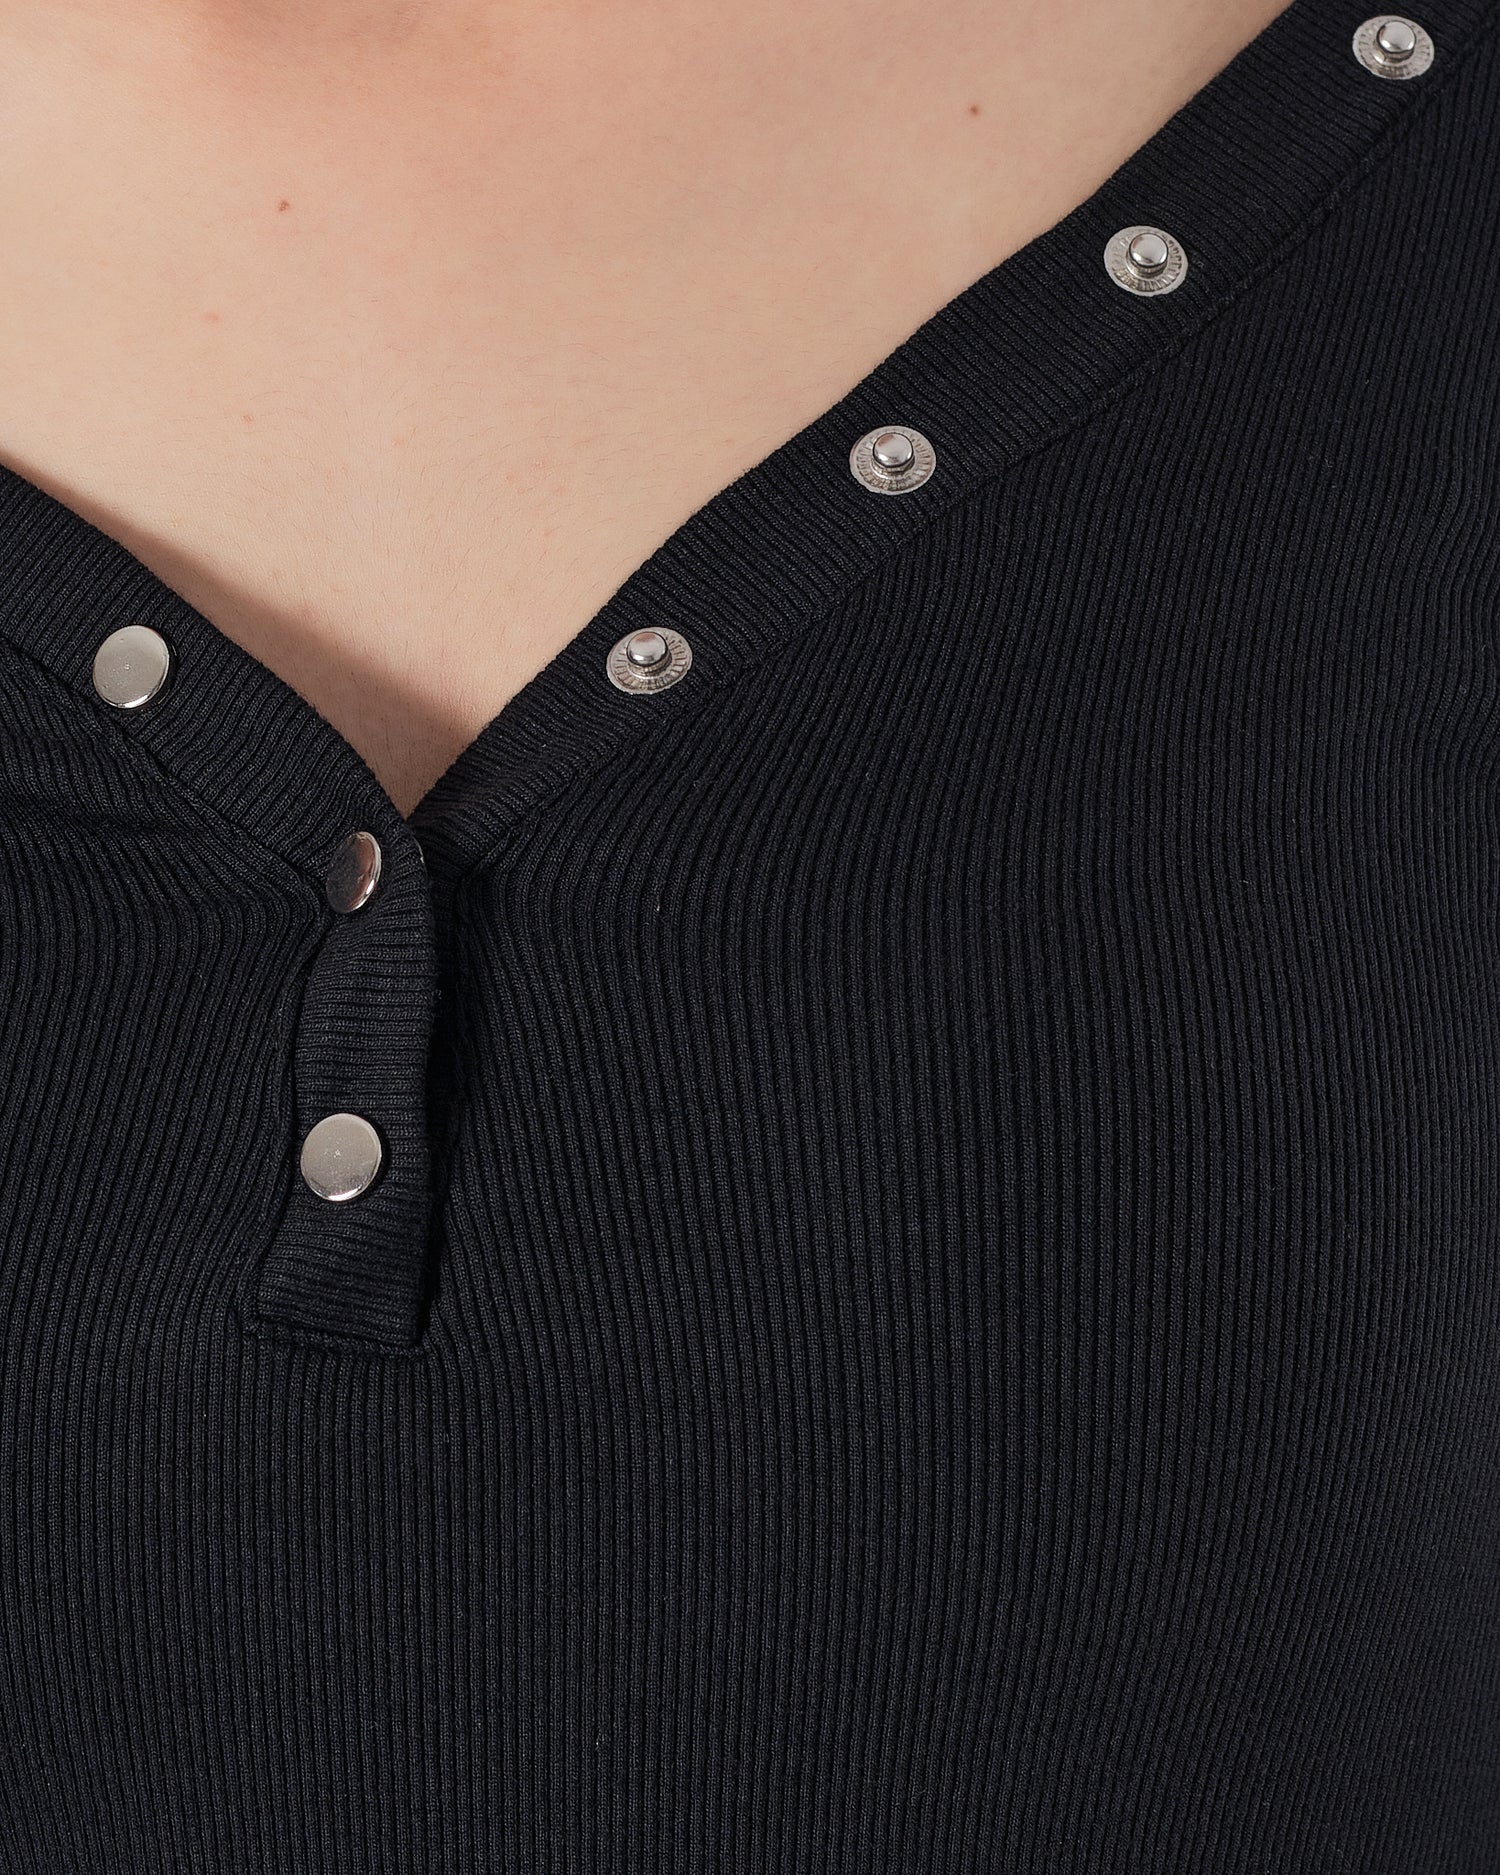 Lady V Neck Black T-Shirt Long Sleeve 12.90